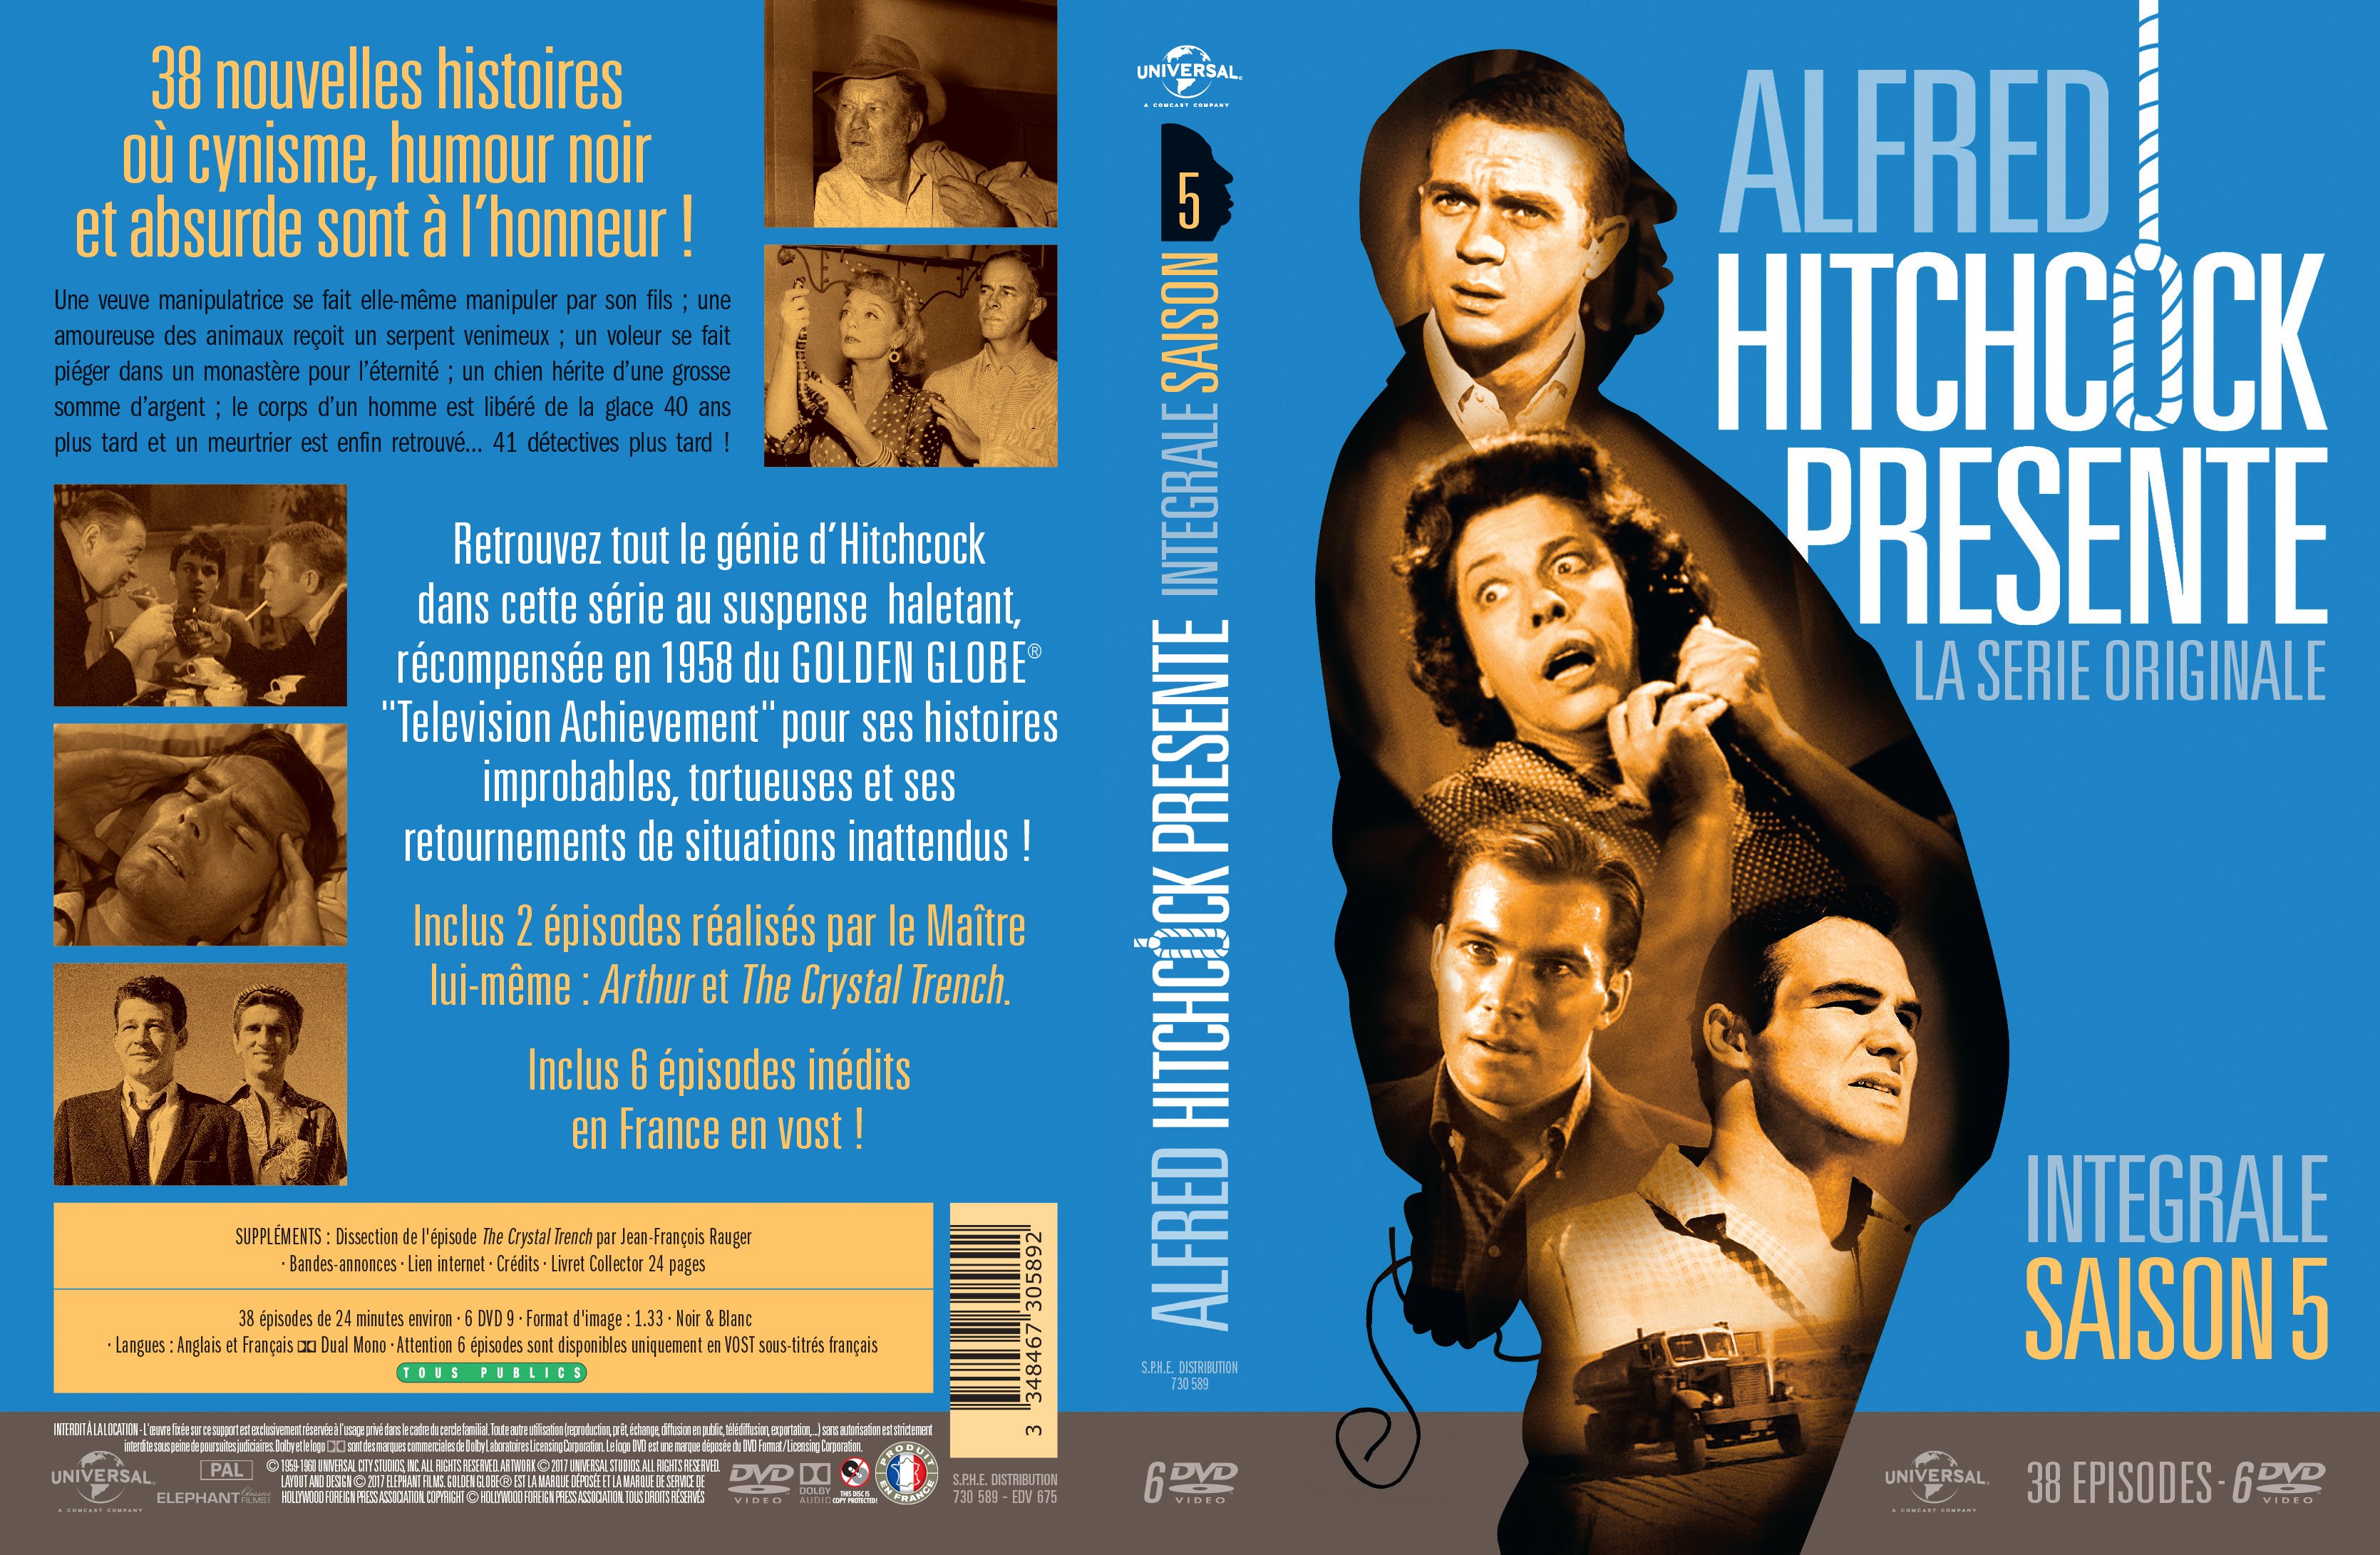 Jaquette DVD Alfred Hitchcock prsente Saison 5